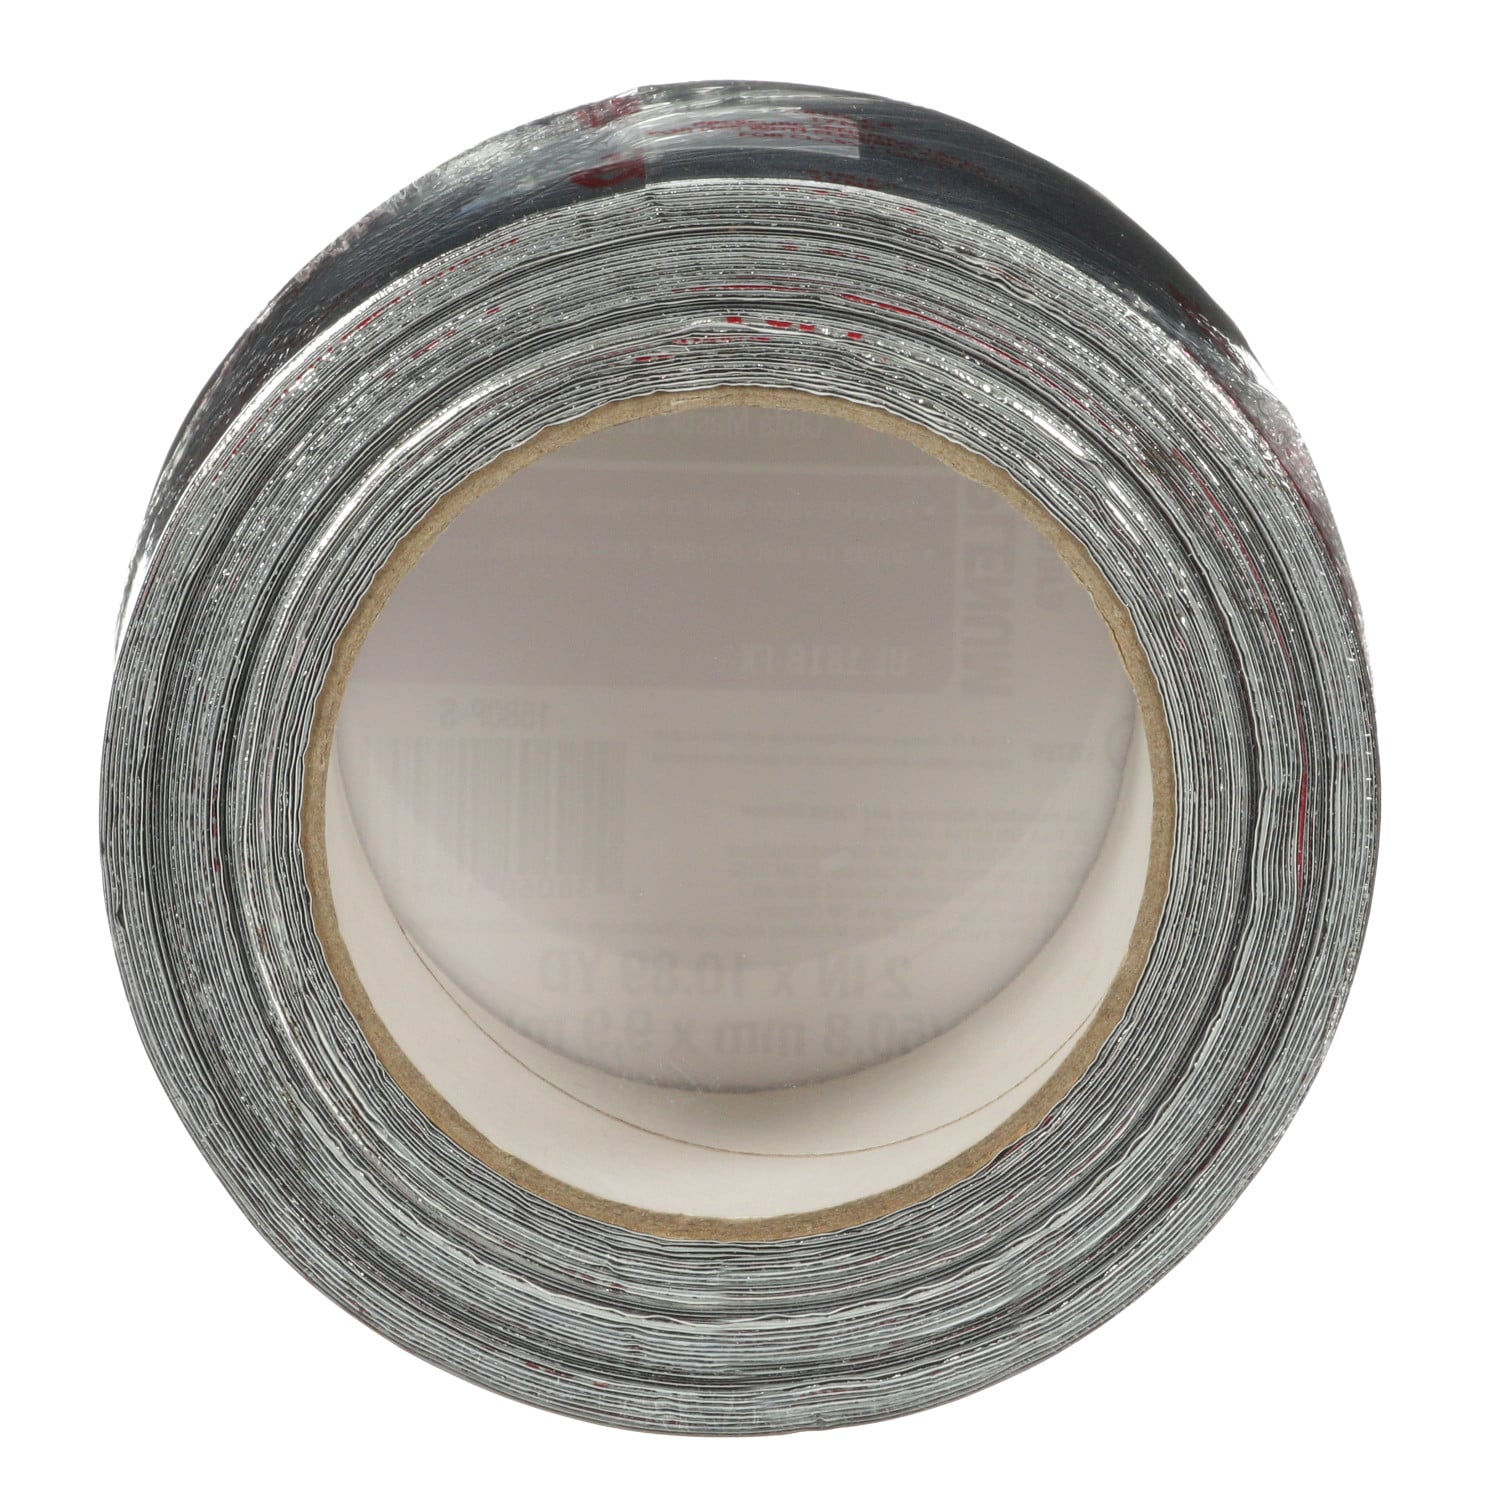 3M Foil Tape 3381 General Purpose HVAC Tape 1.88-in x 150-ft in